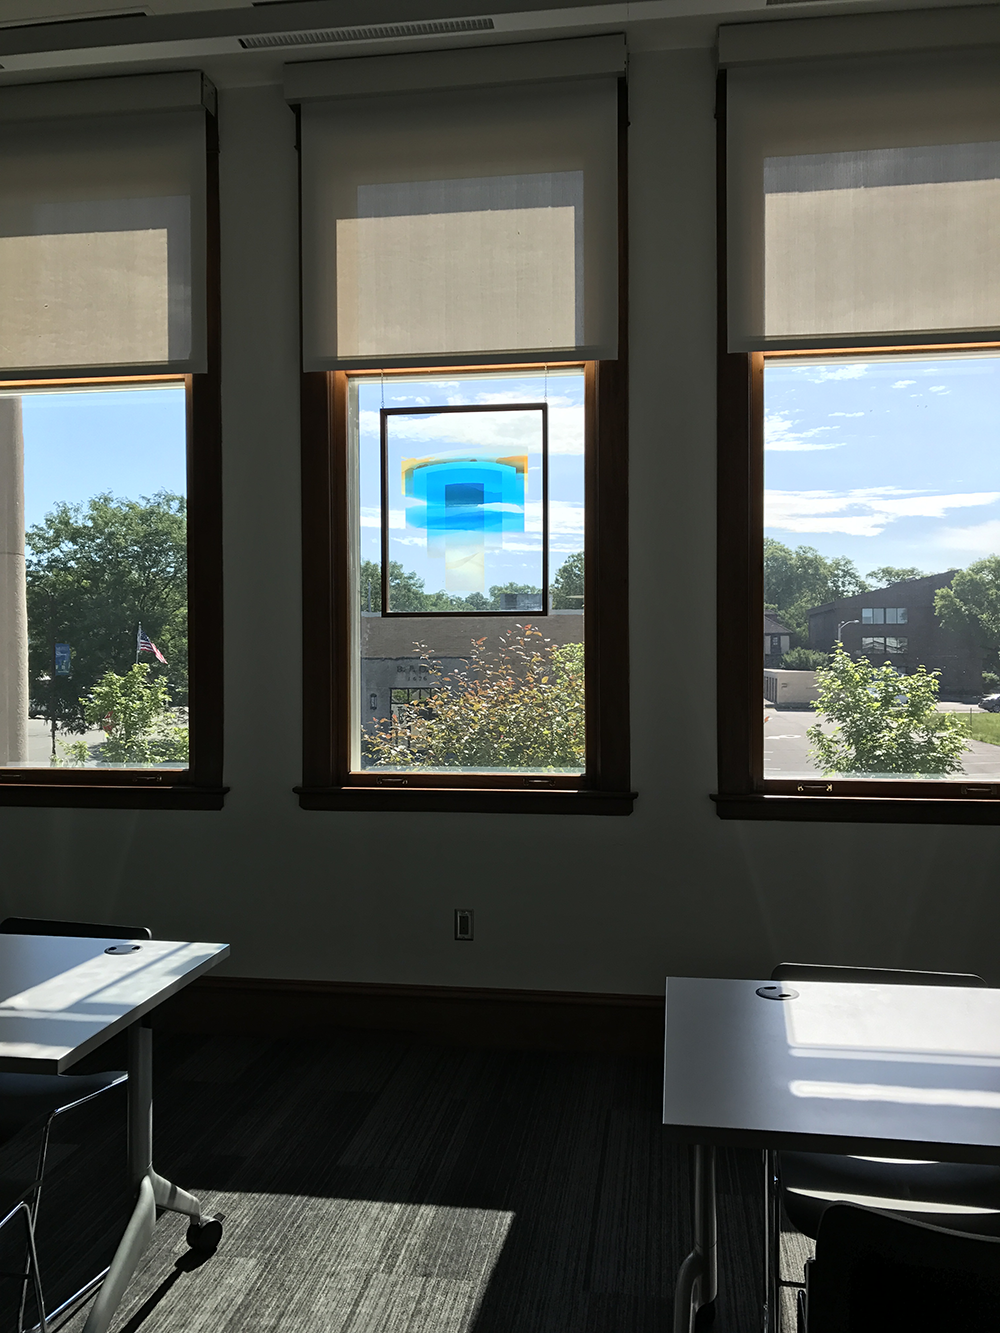 Sealine Glass hung on window pane